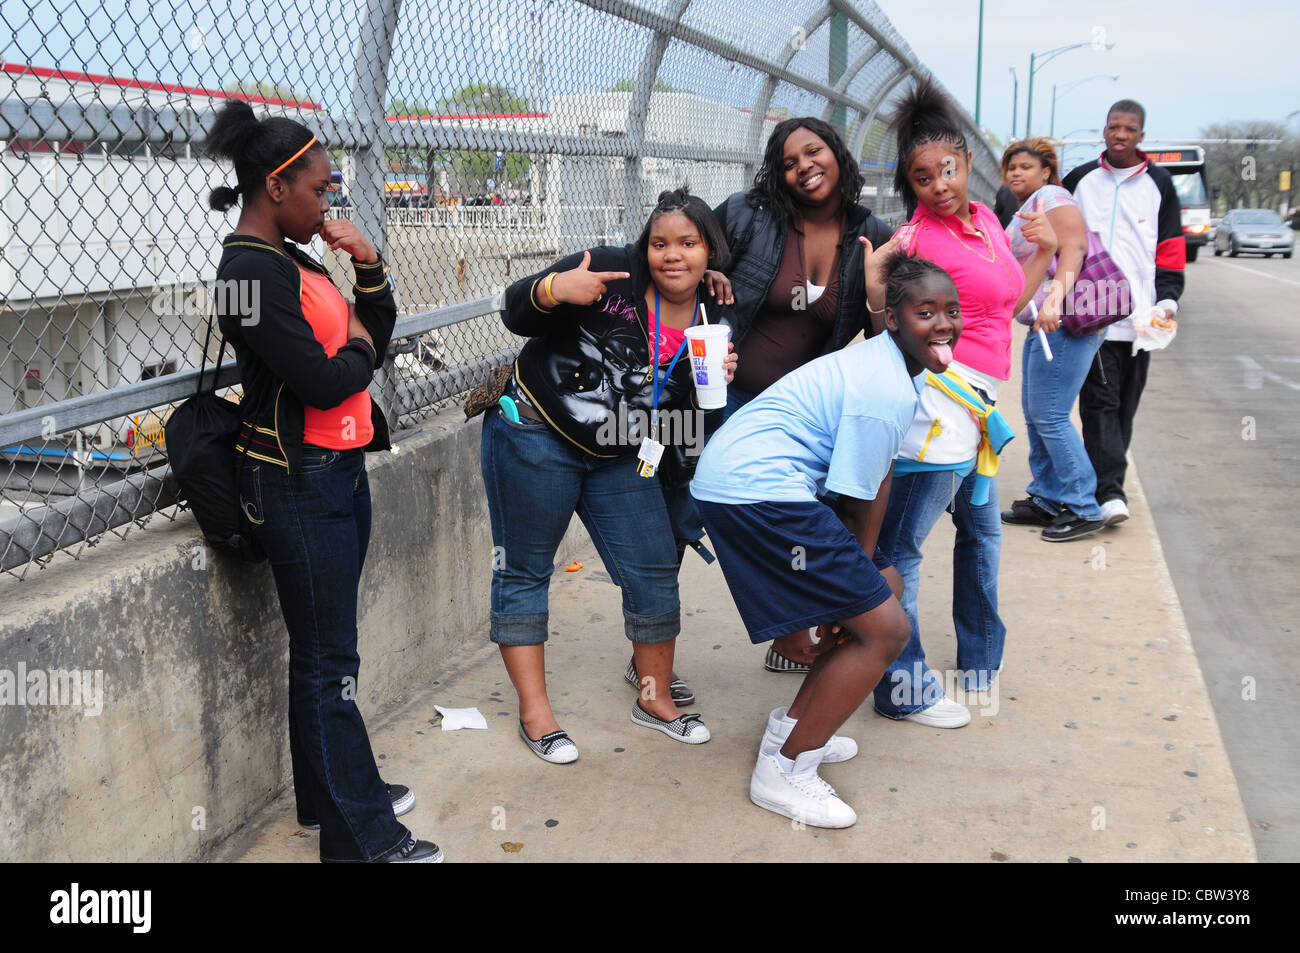 School children at Dan Ryan viduct Chicago, ILL USA, black, youngsters, fun, joking Stock Photo